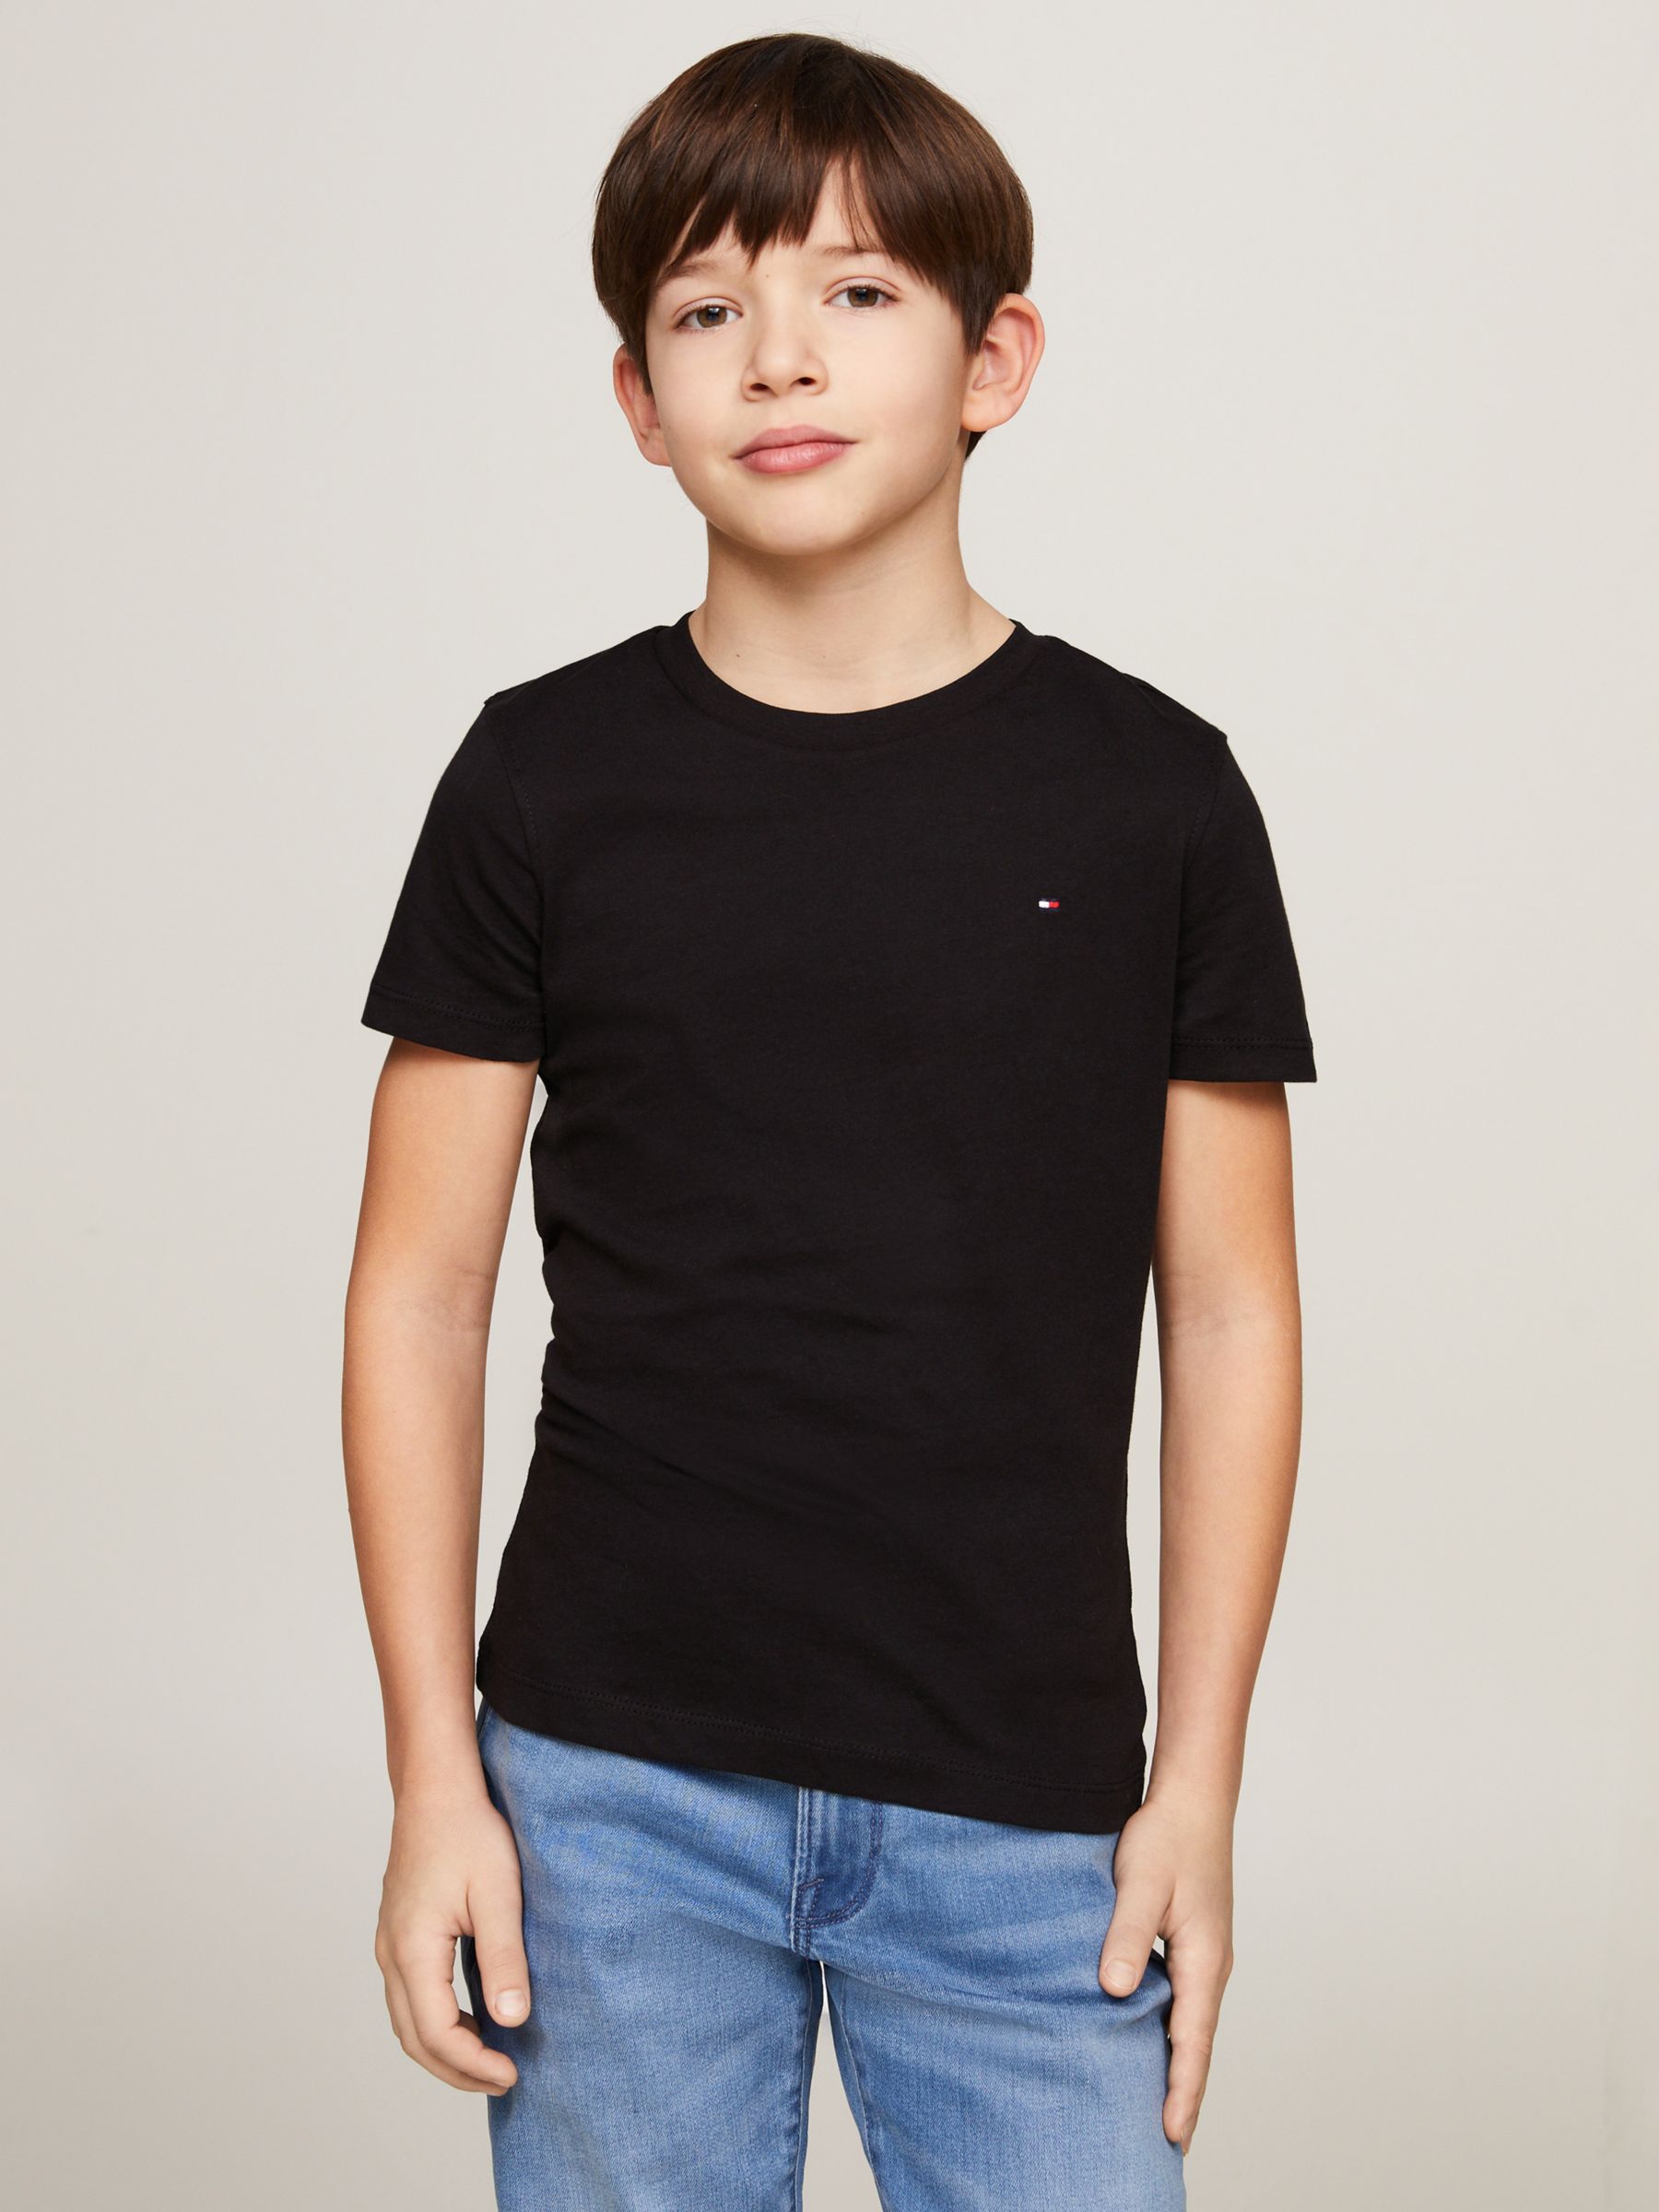 Tommy Hilfiger Kids' Basic Crew Neck Short Sleeve Top, Black at John Lewis  & Partners